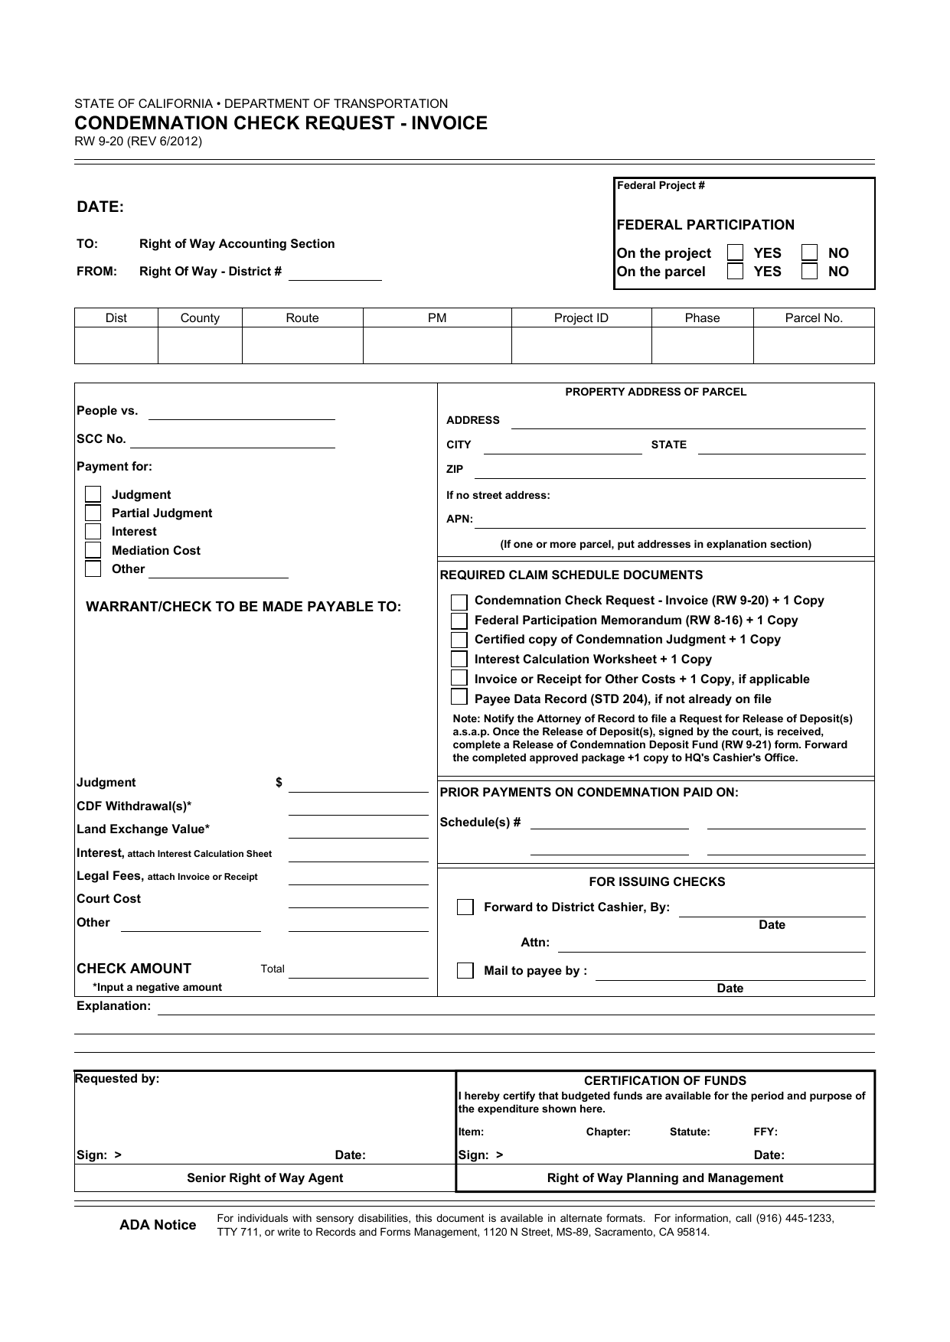 Form RW9-20 Condemnation Check Request - Invoice - California, Page 1